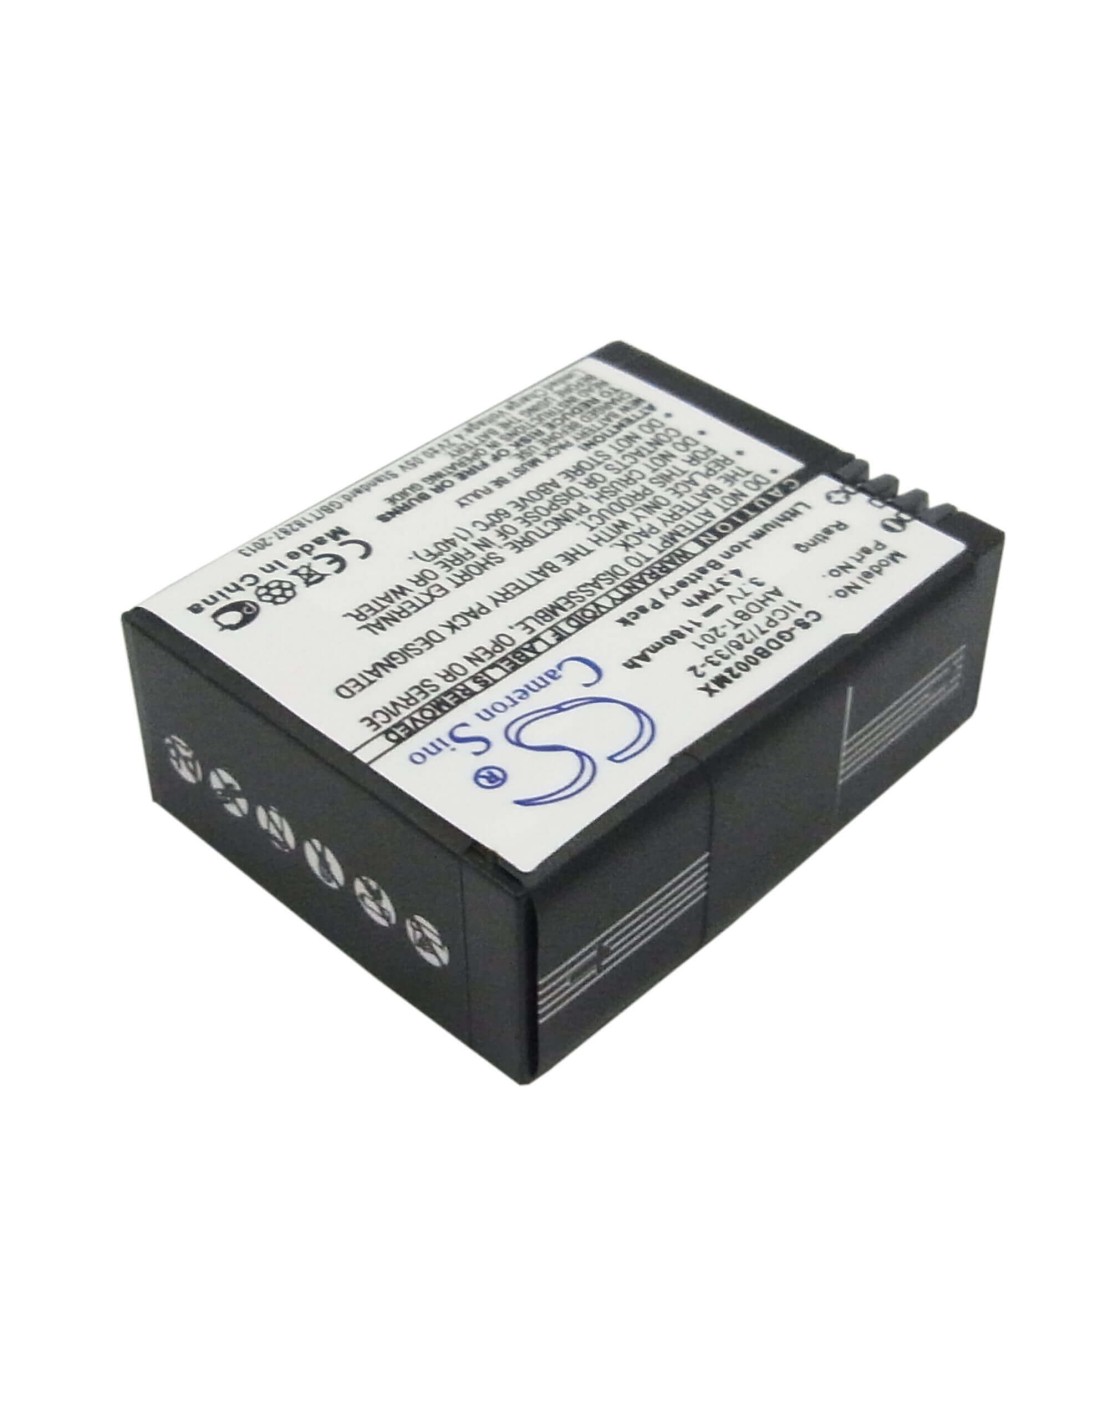 Battery for Gopro Hd Hero3 Black Edition, 3.7V, 1180mAh - 4.37Wh